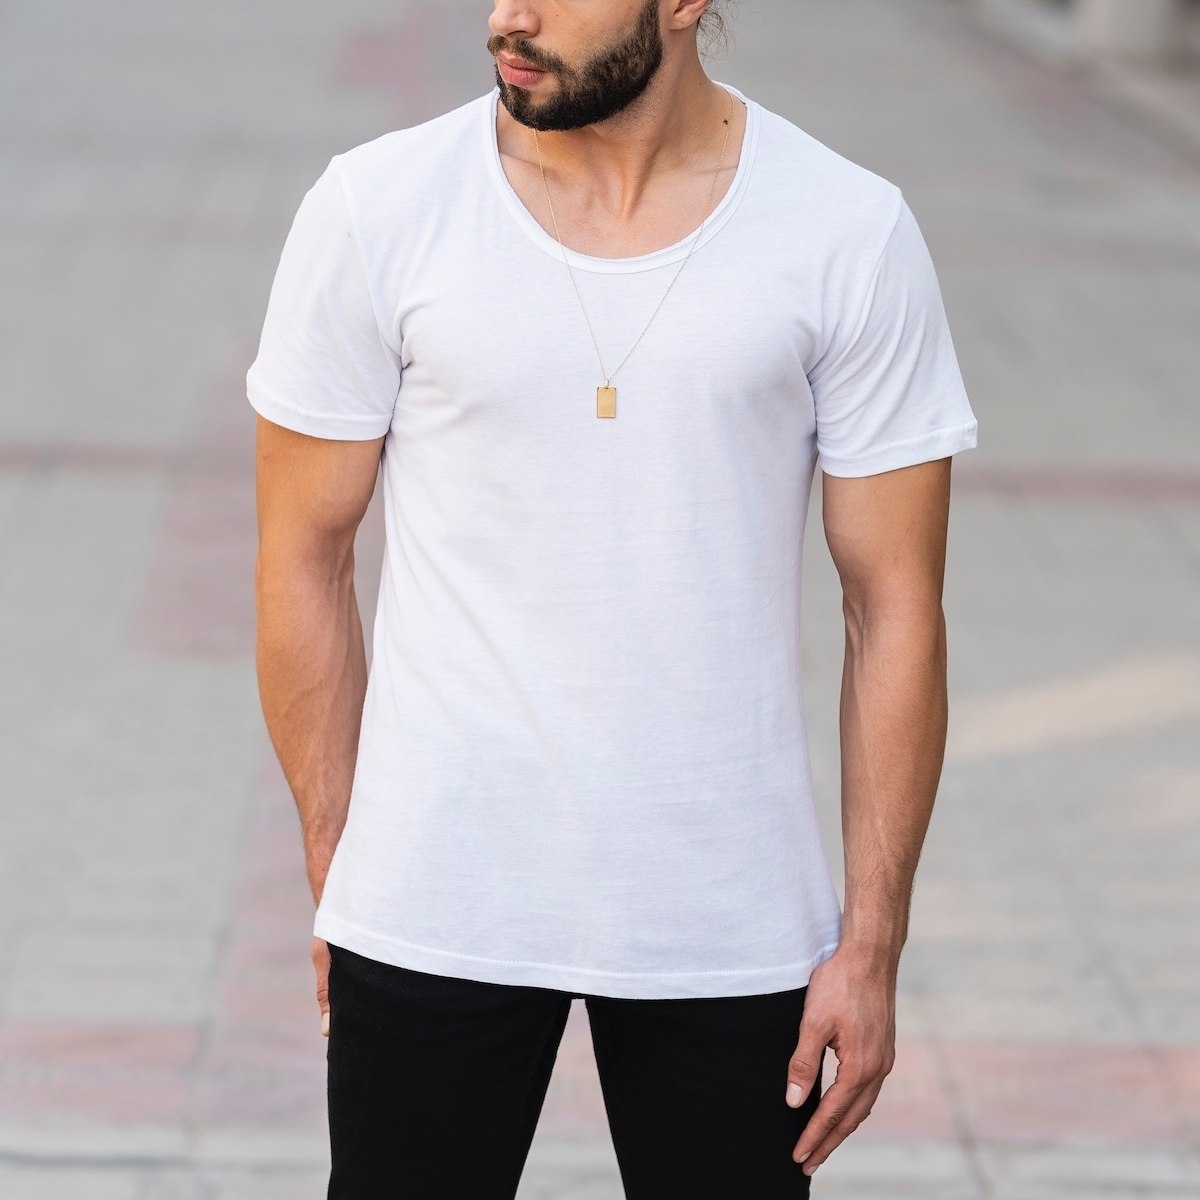 Croped Collar White T-Shirt